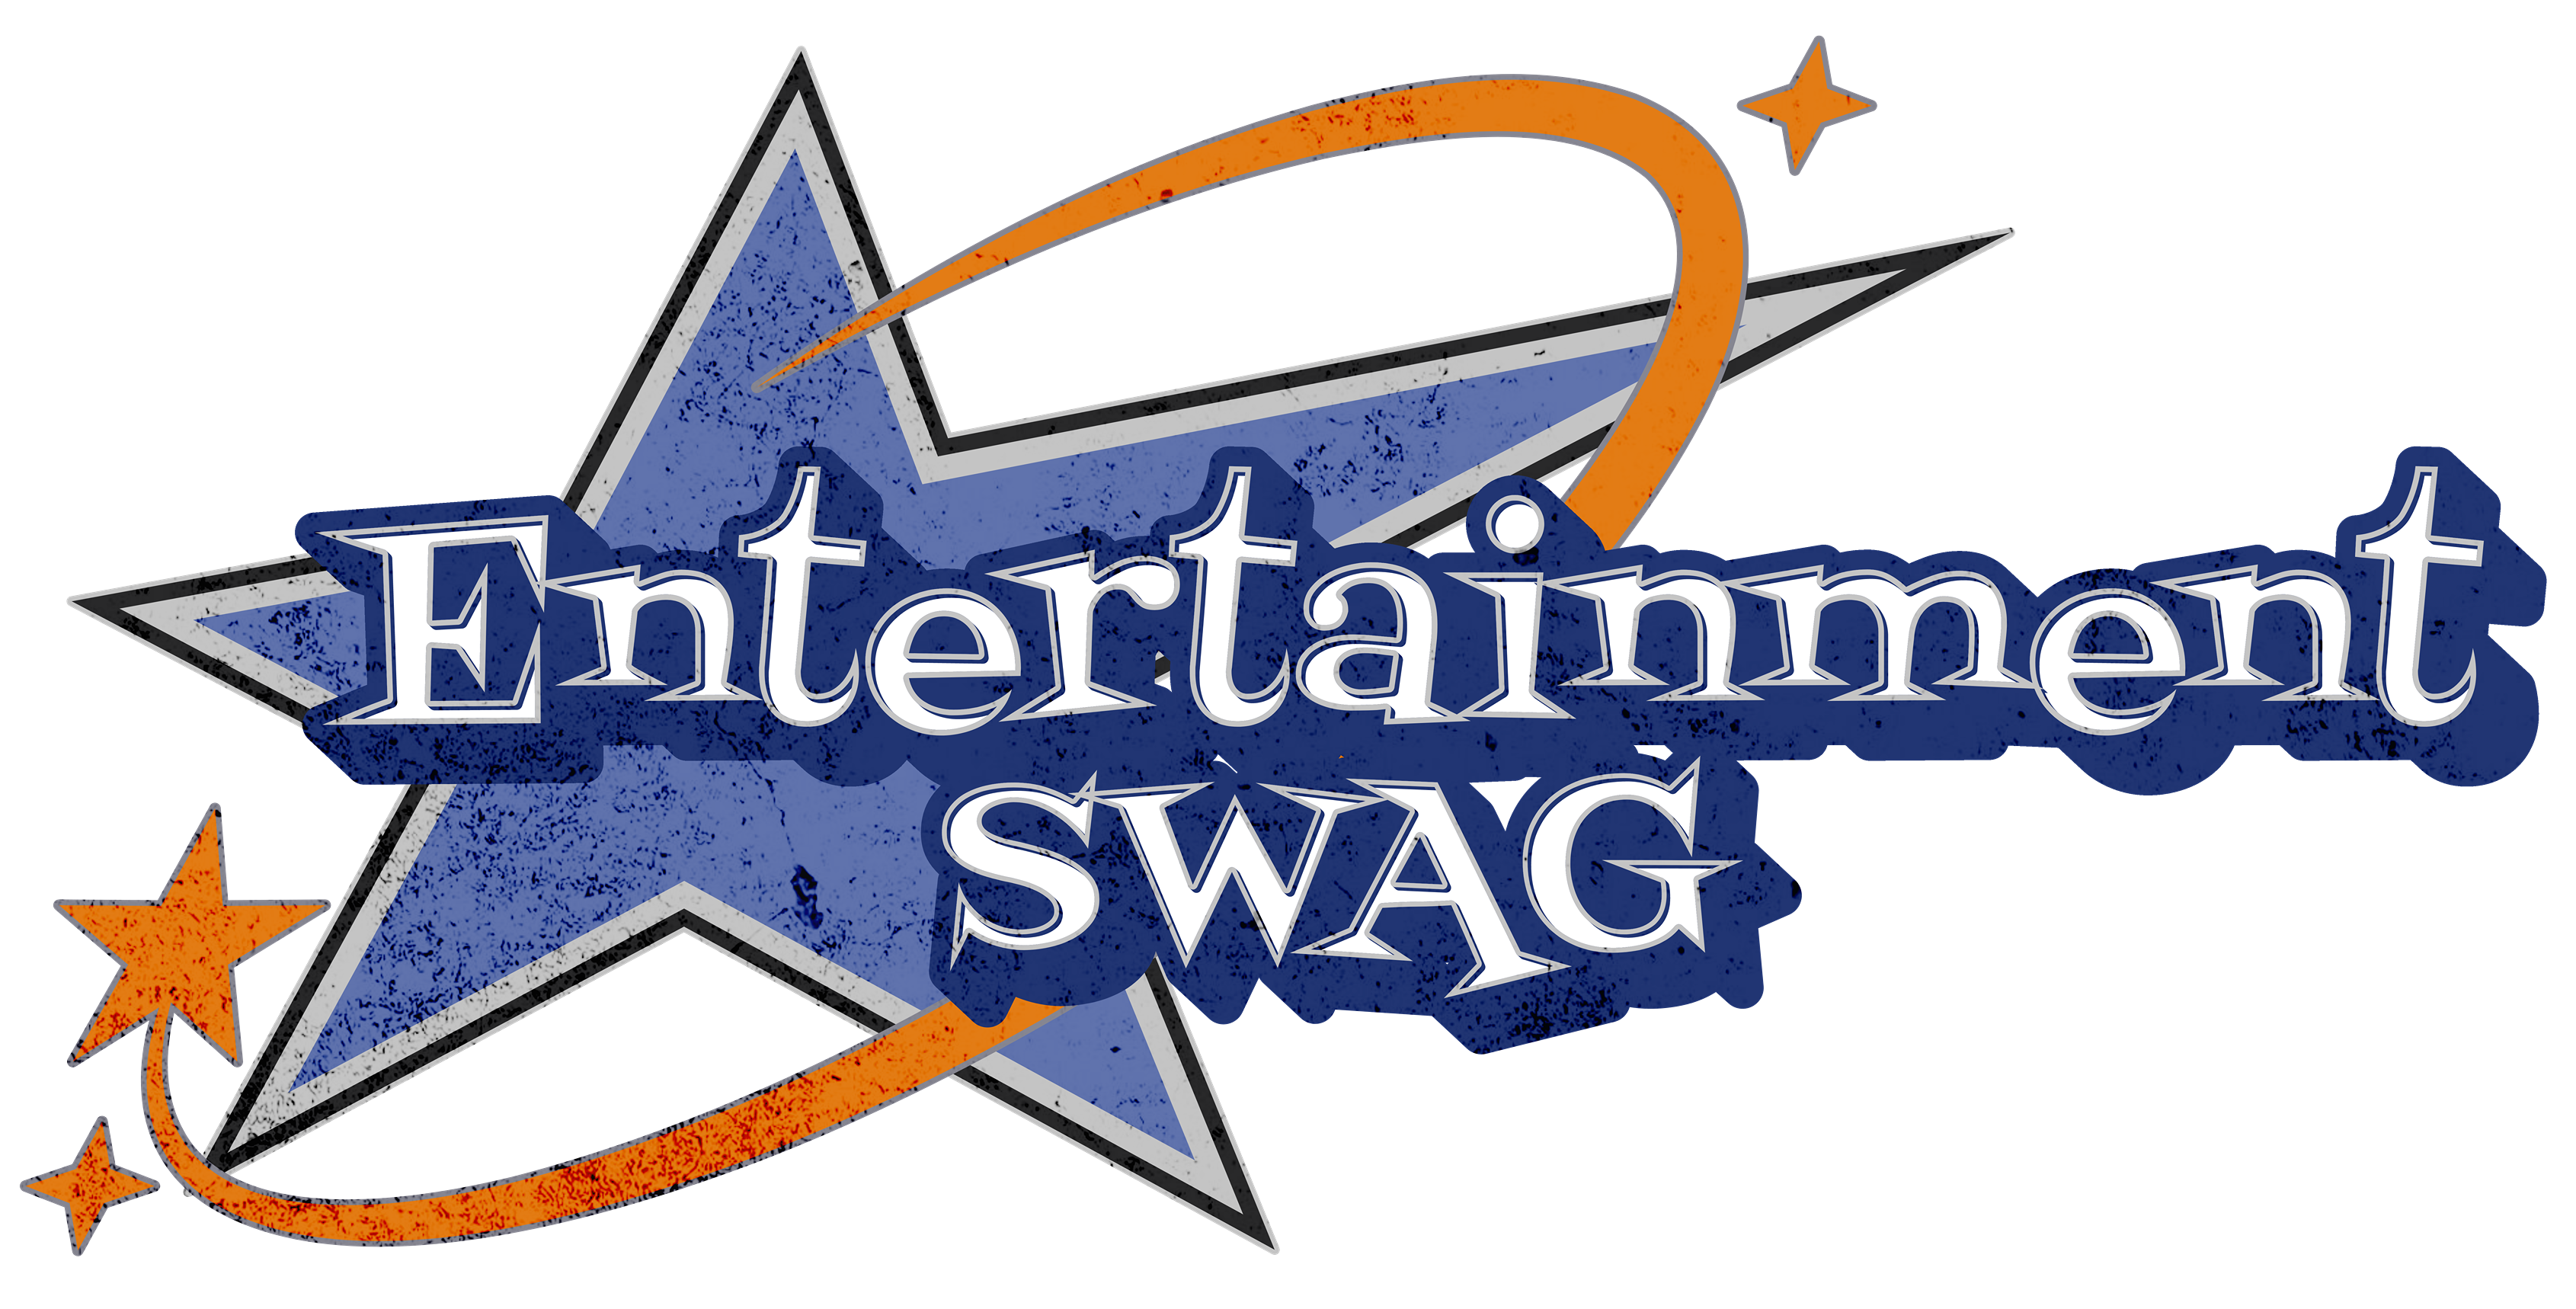 Entertainment Swag